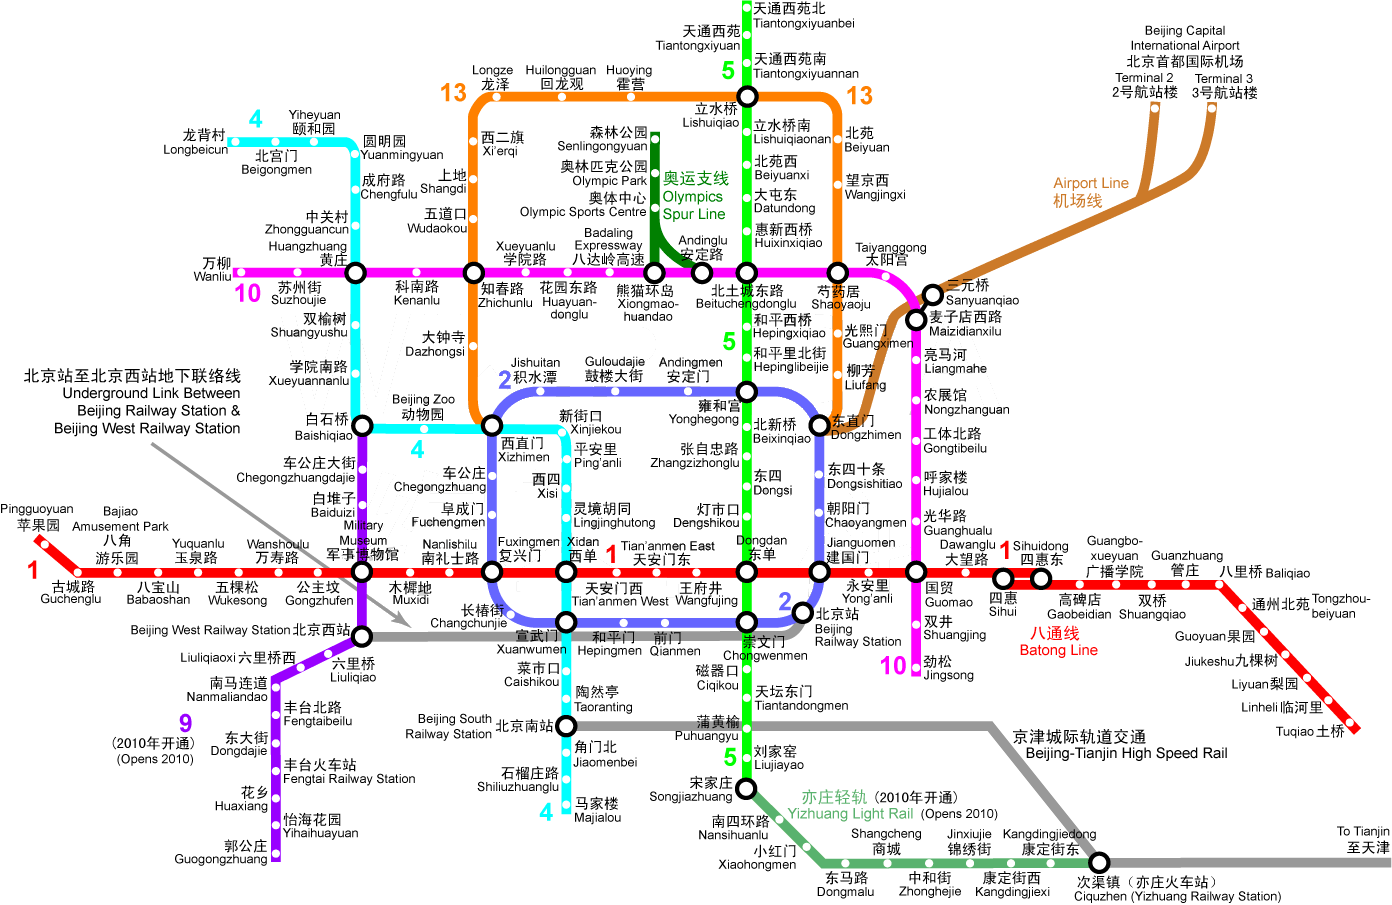 beijing-subway-map-new.png